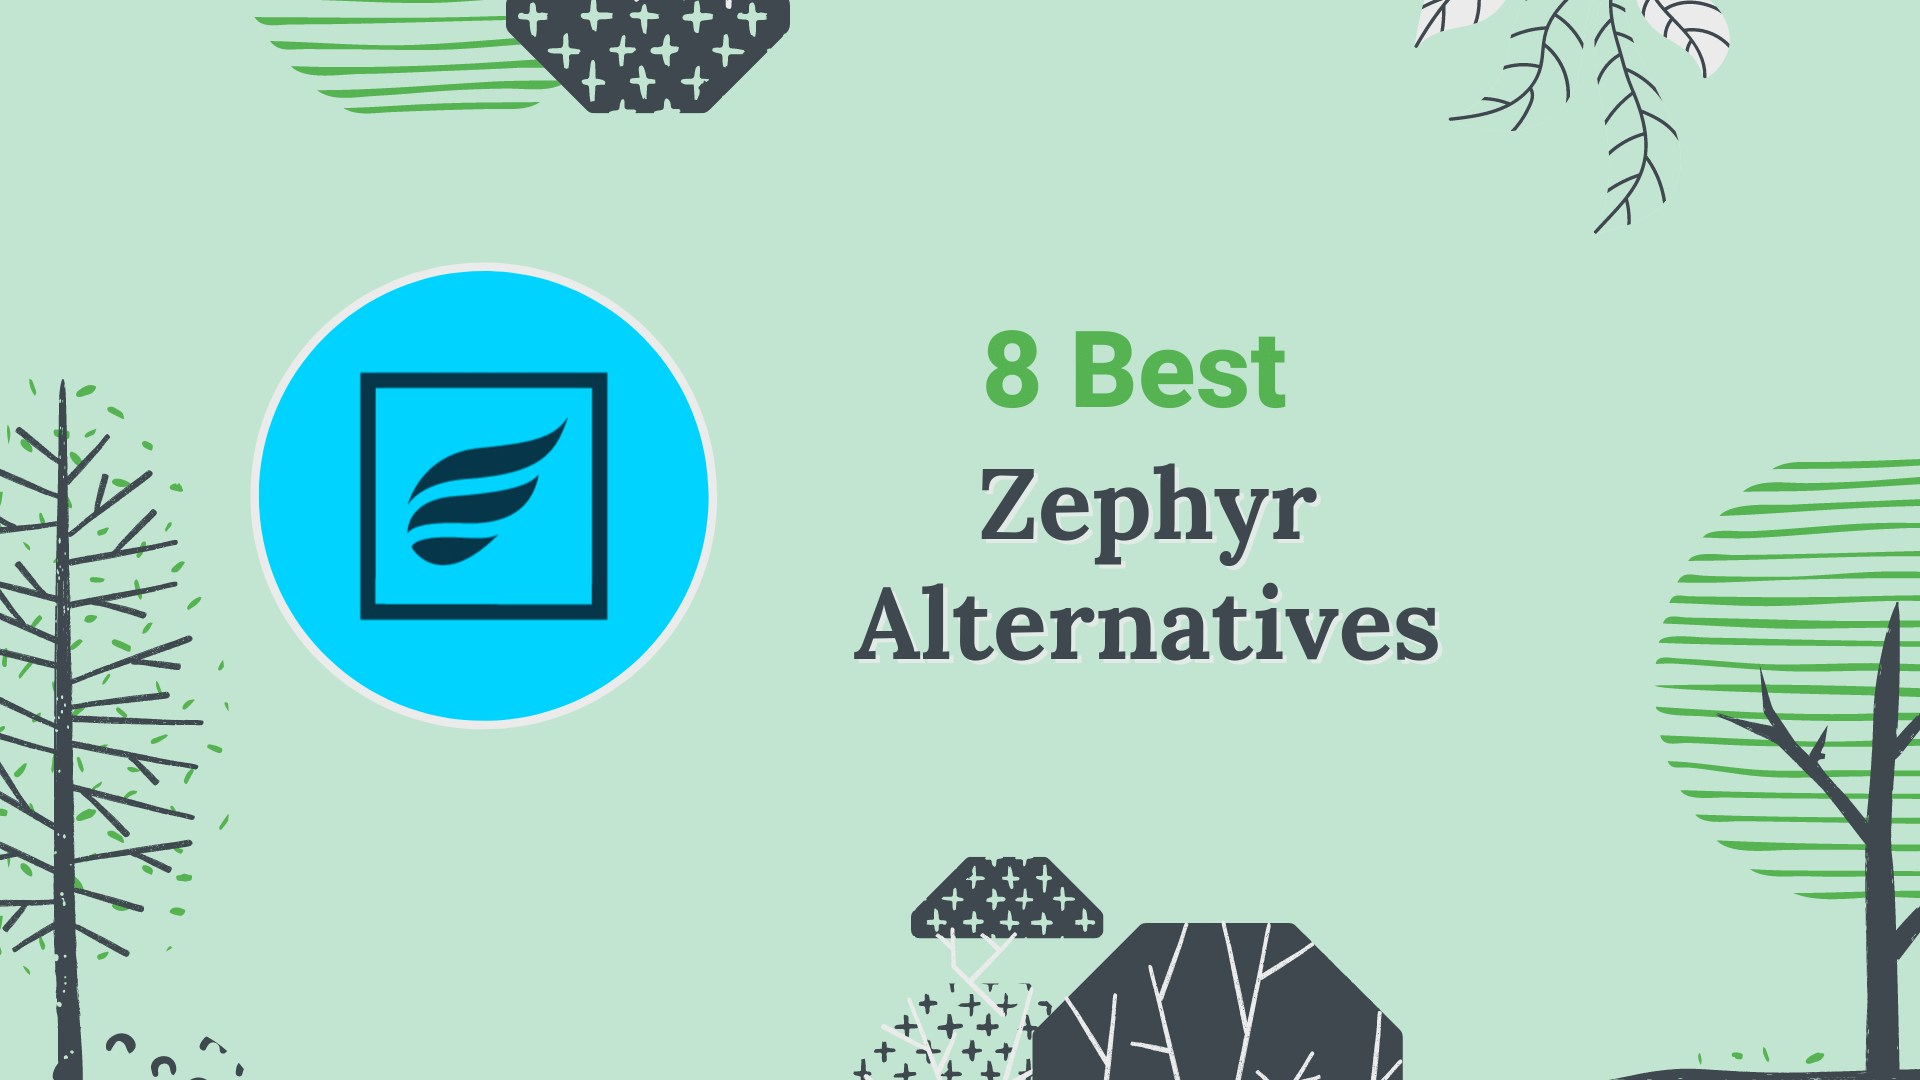 Zephyr Alternatives cover image